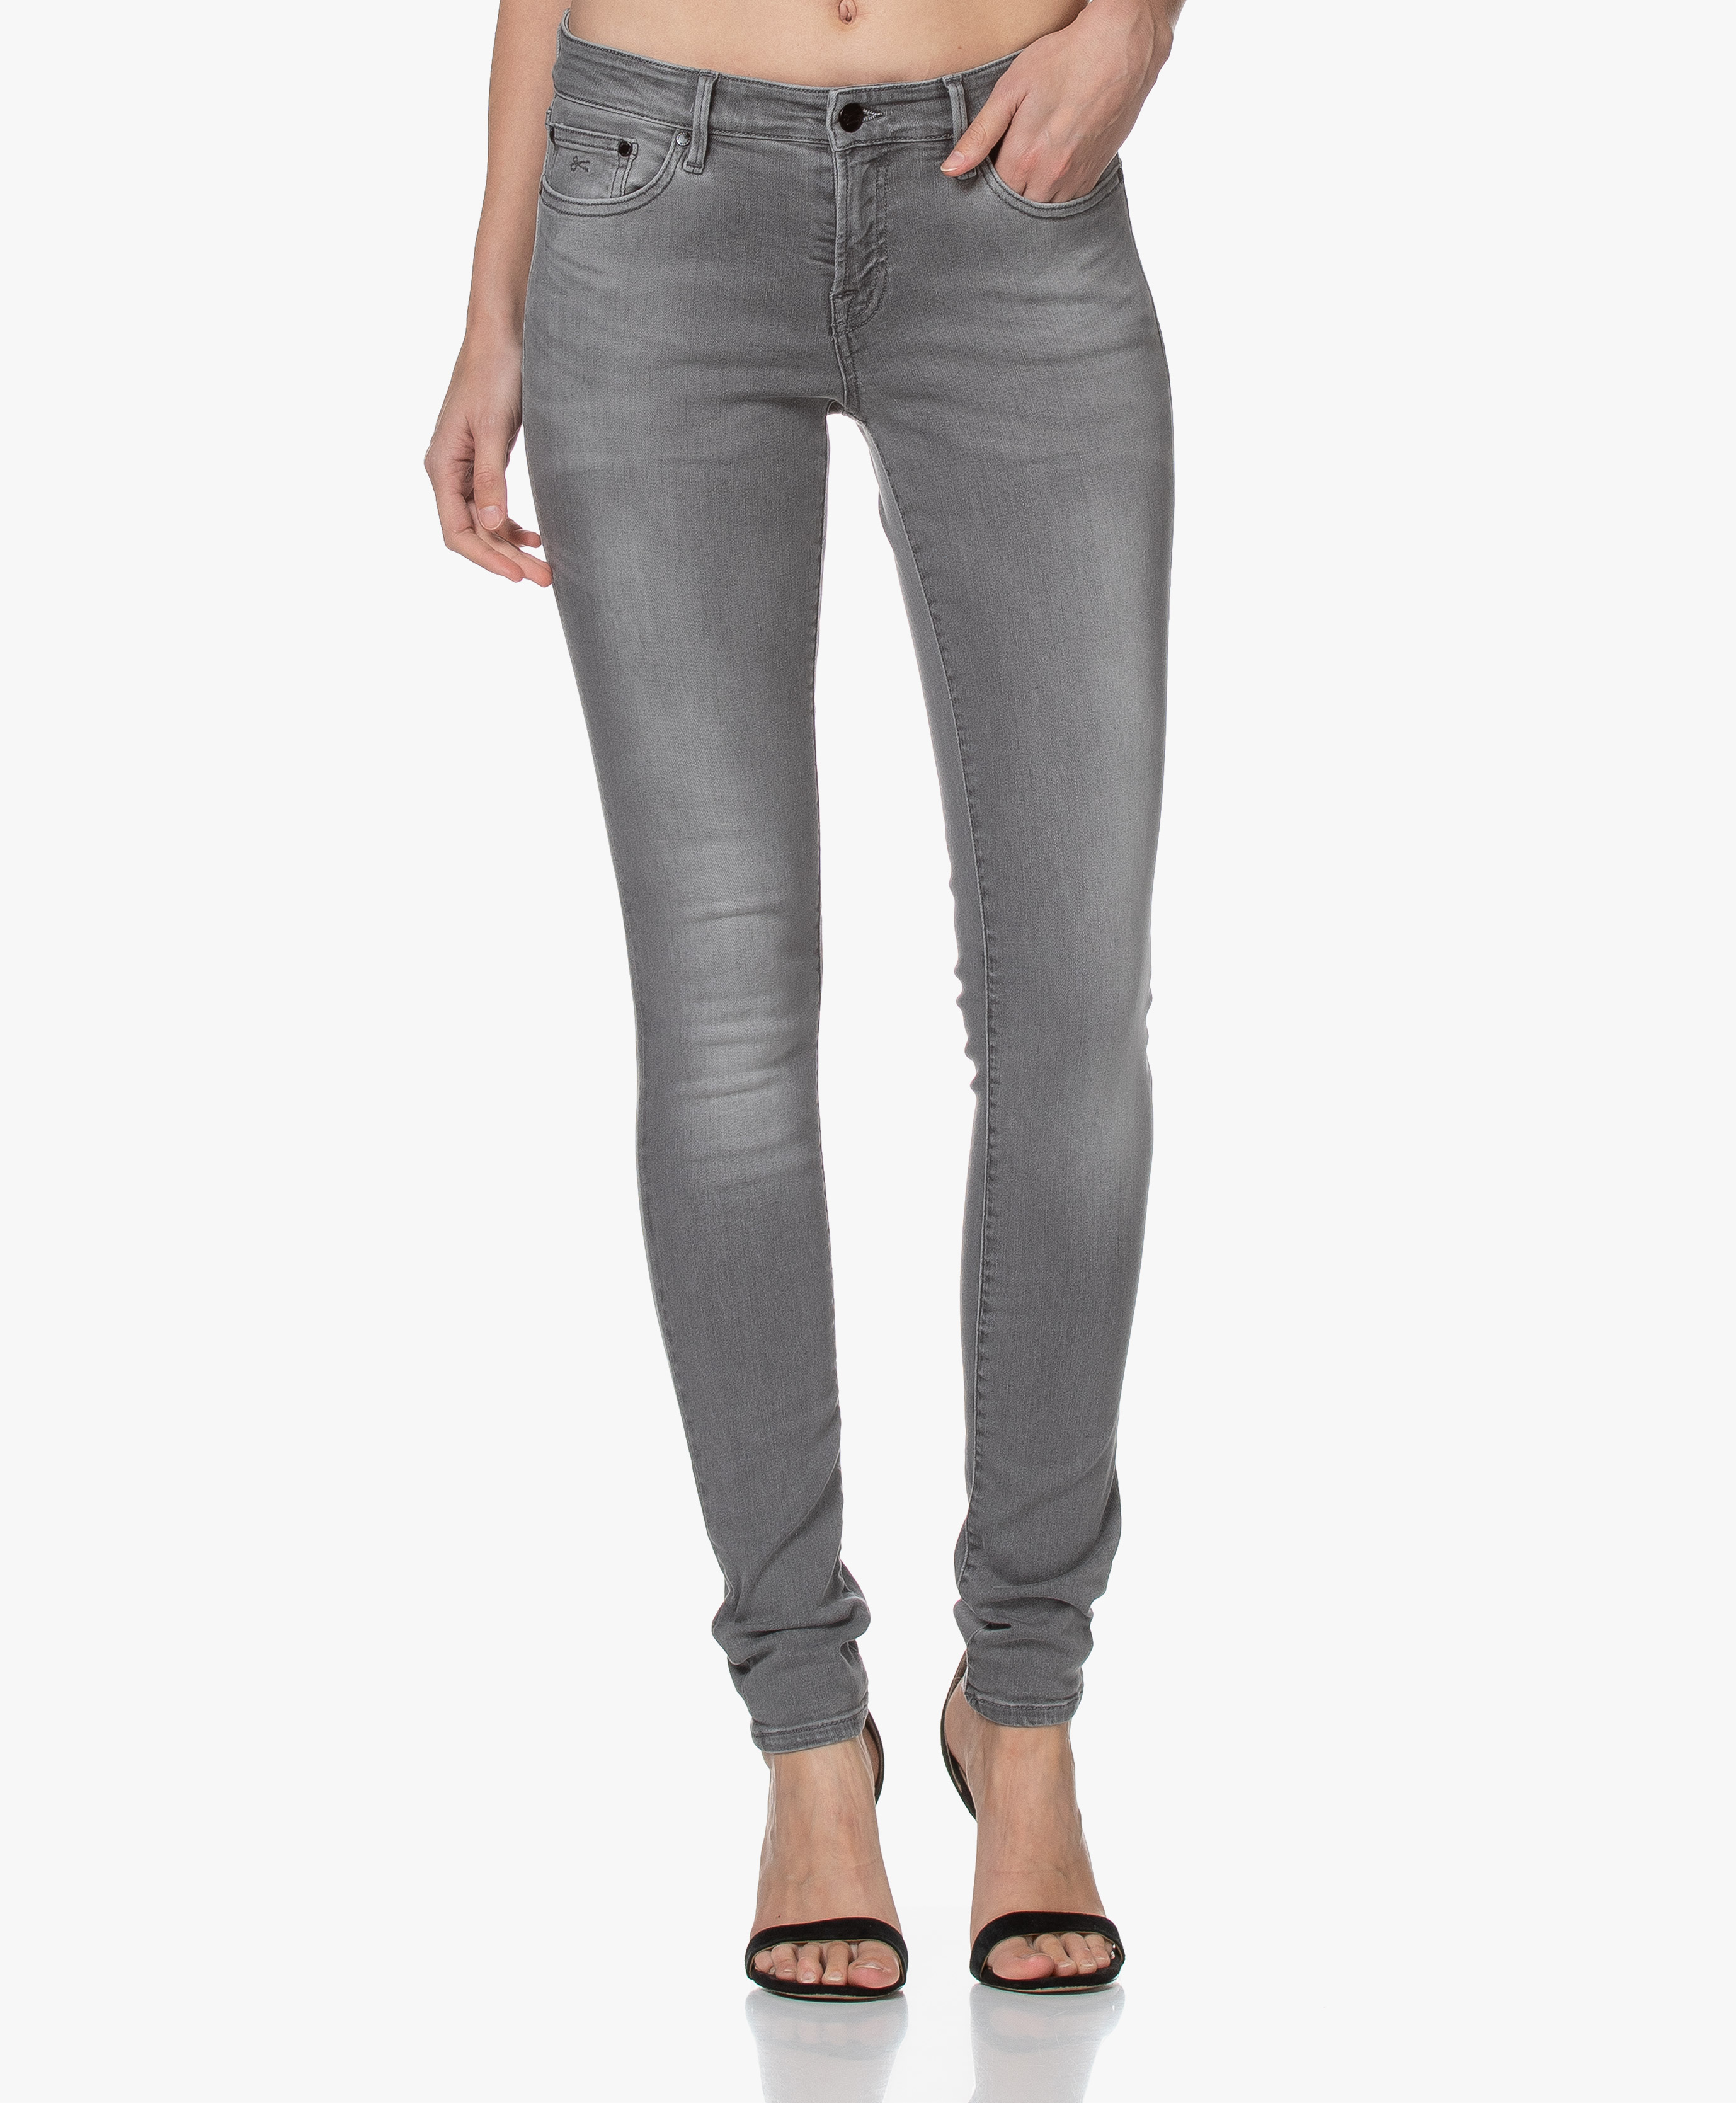 jeans grey